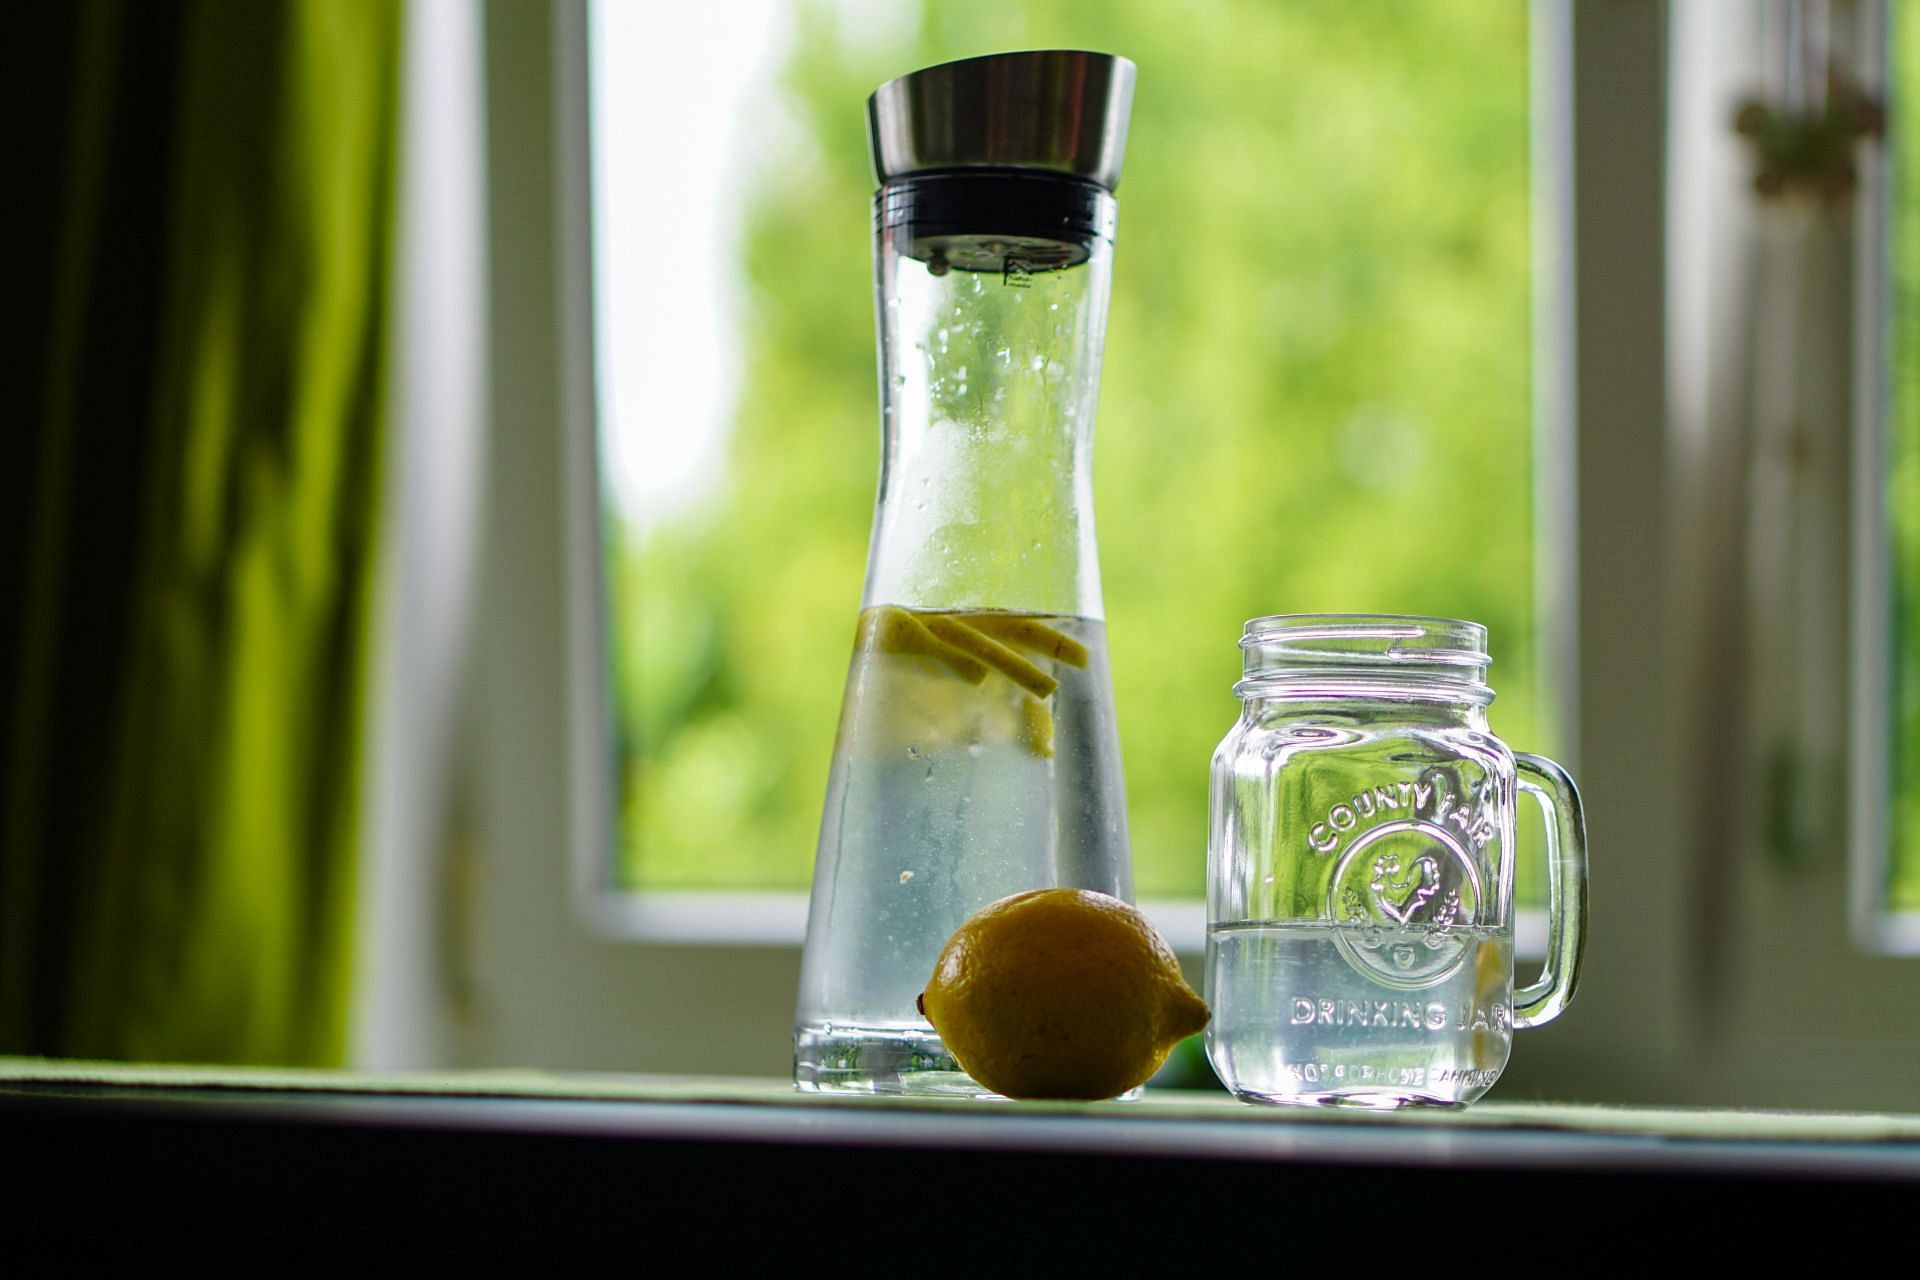 Lemon water can help up your intake of vitamin C. (Image via Pexels/Pixabay)